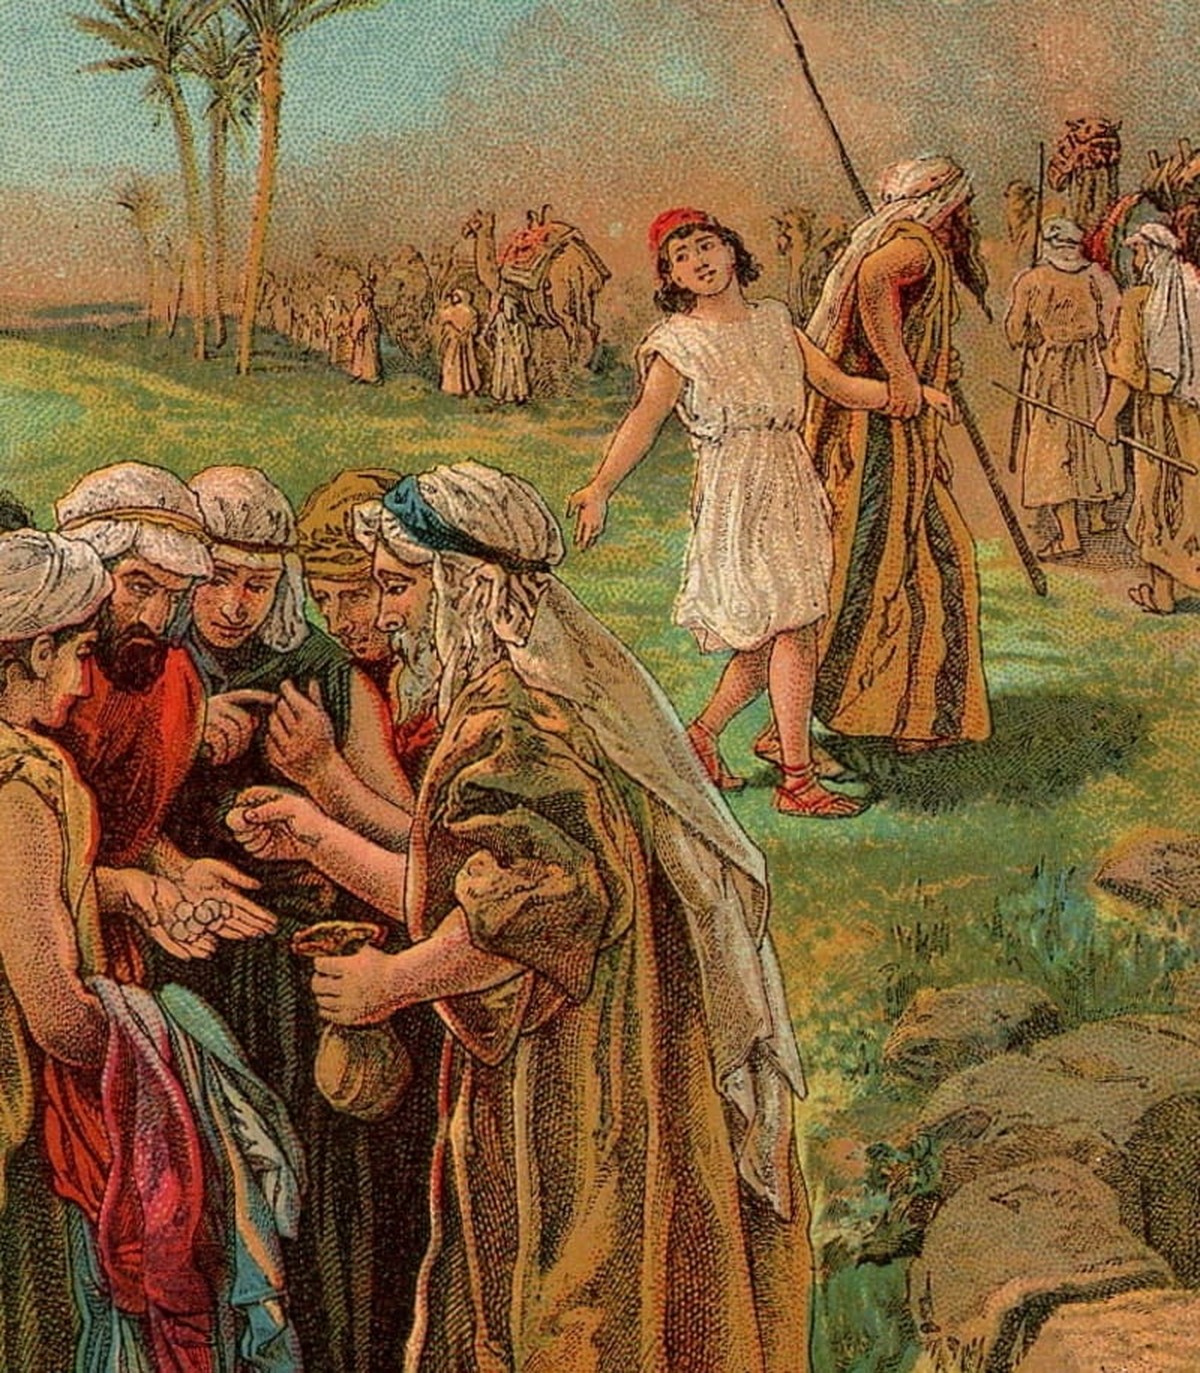 The Bible Story of Joseph